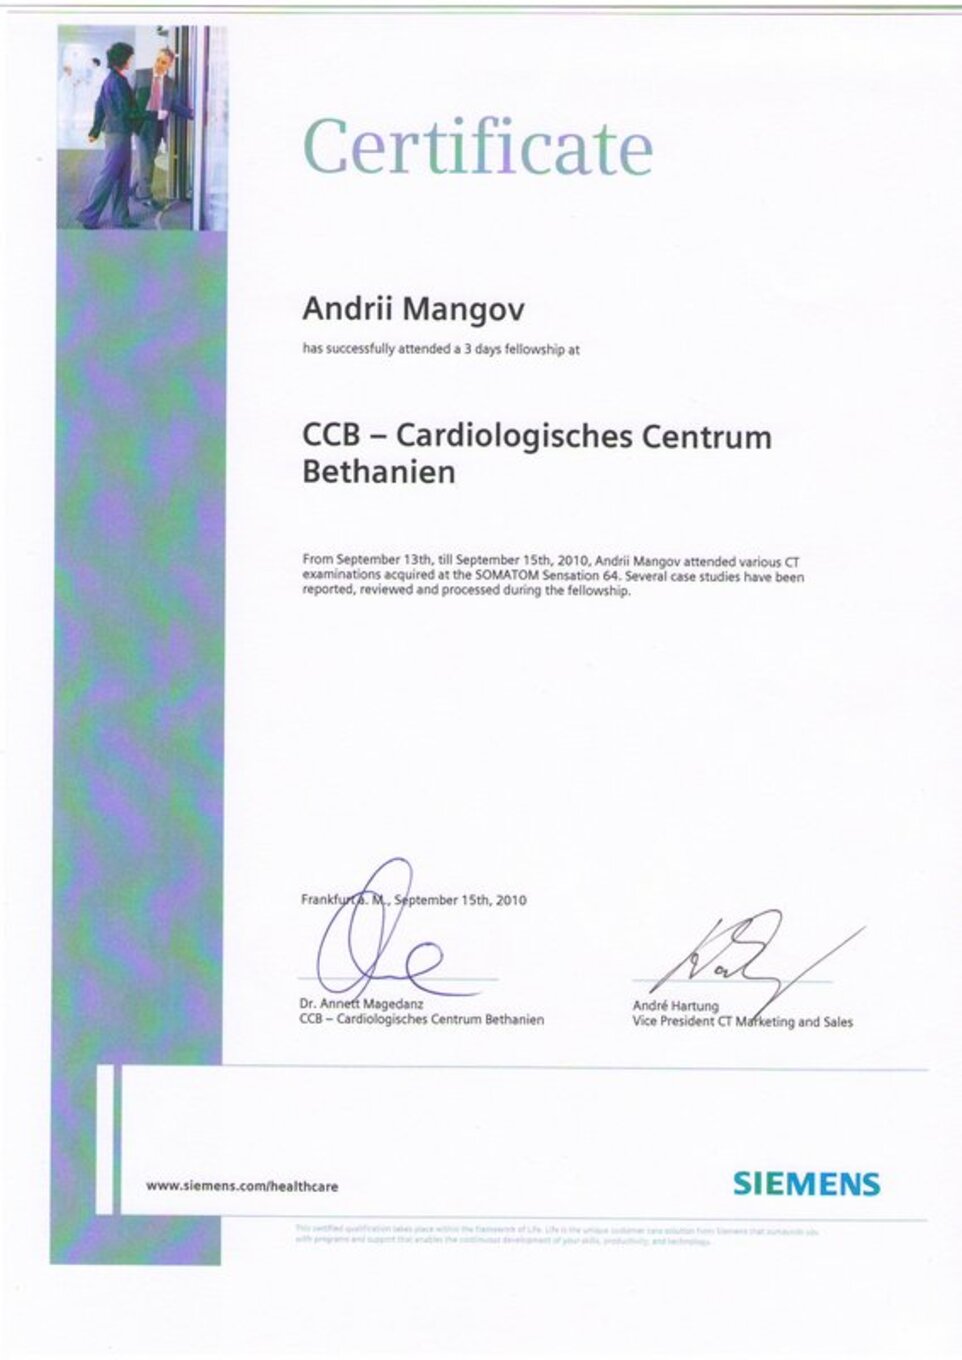 certificates/mangov-andrij-volodimirovich/mangov-certificates-06.jpg